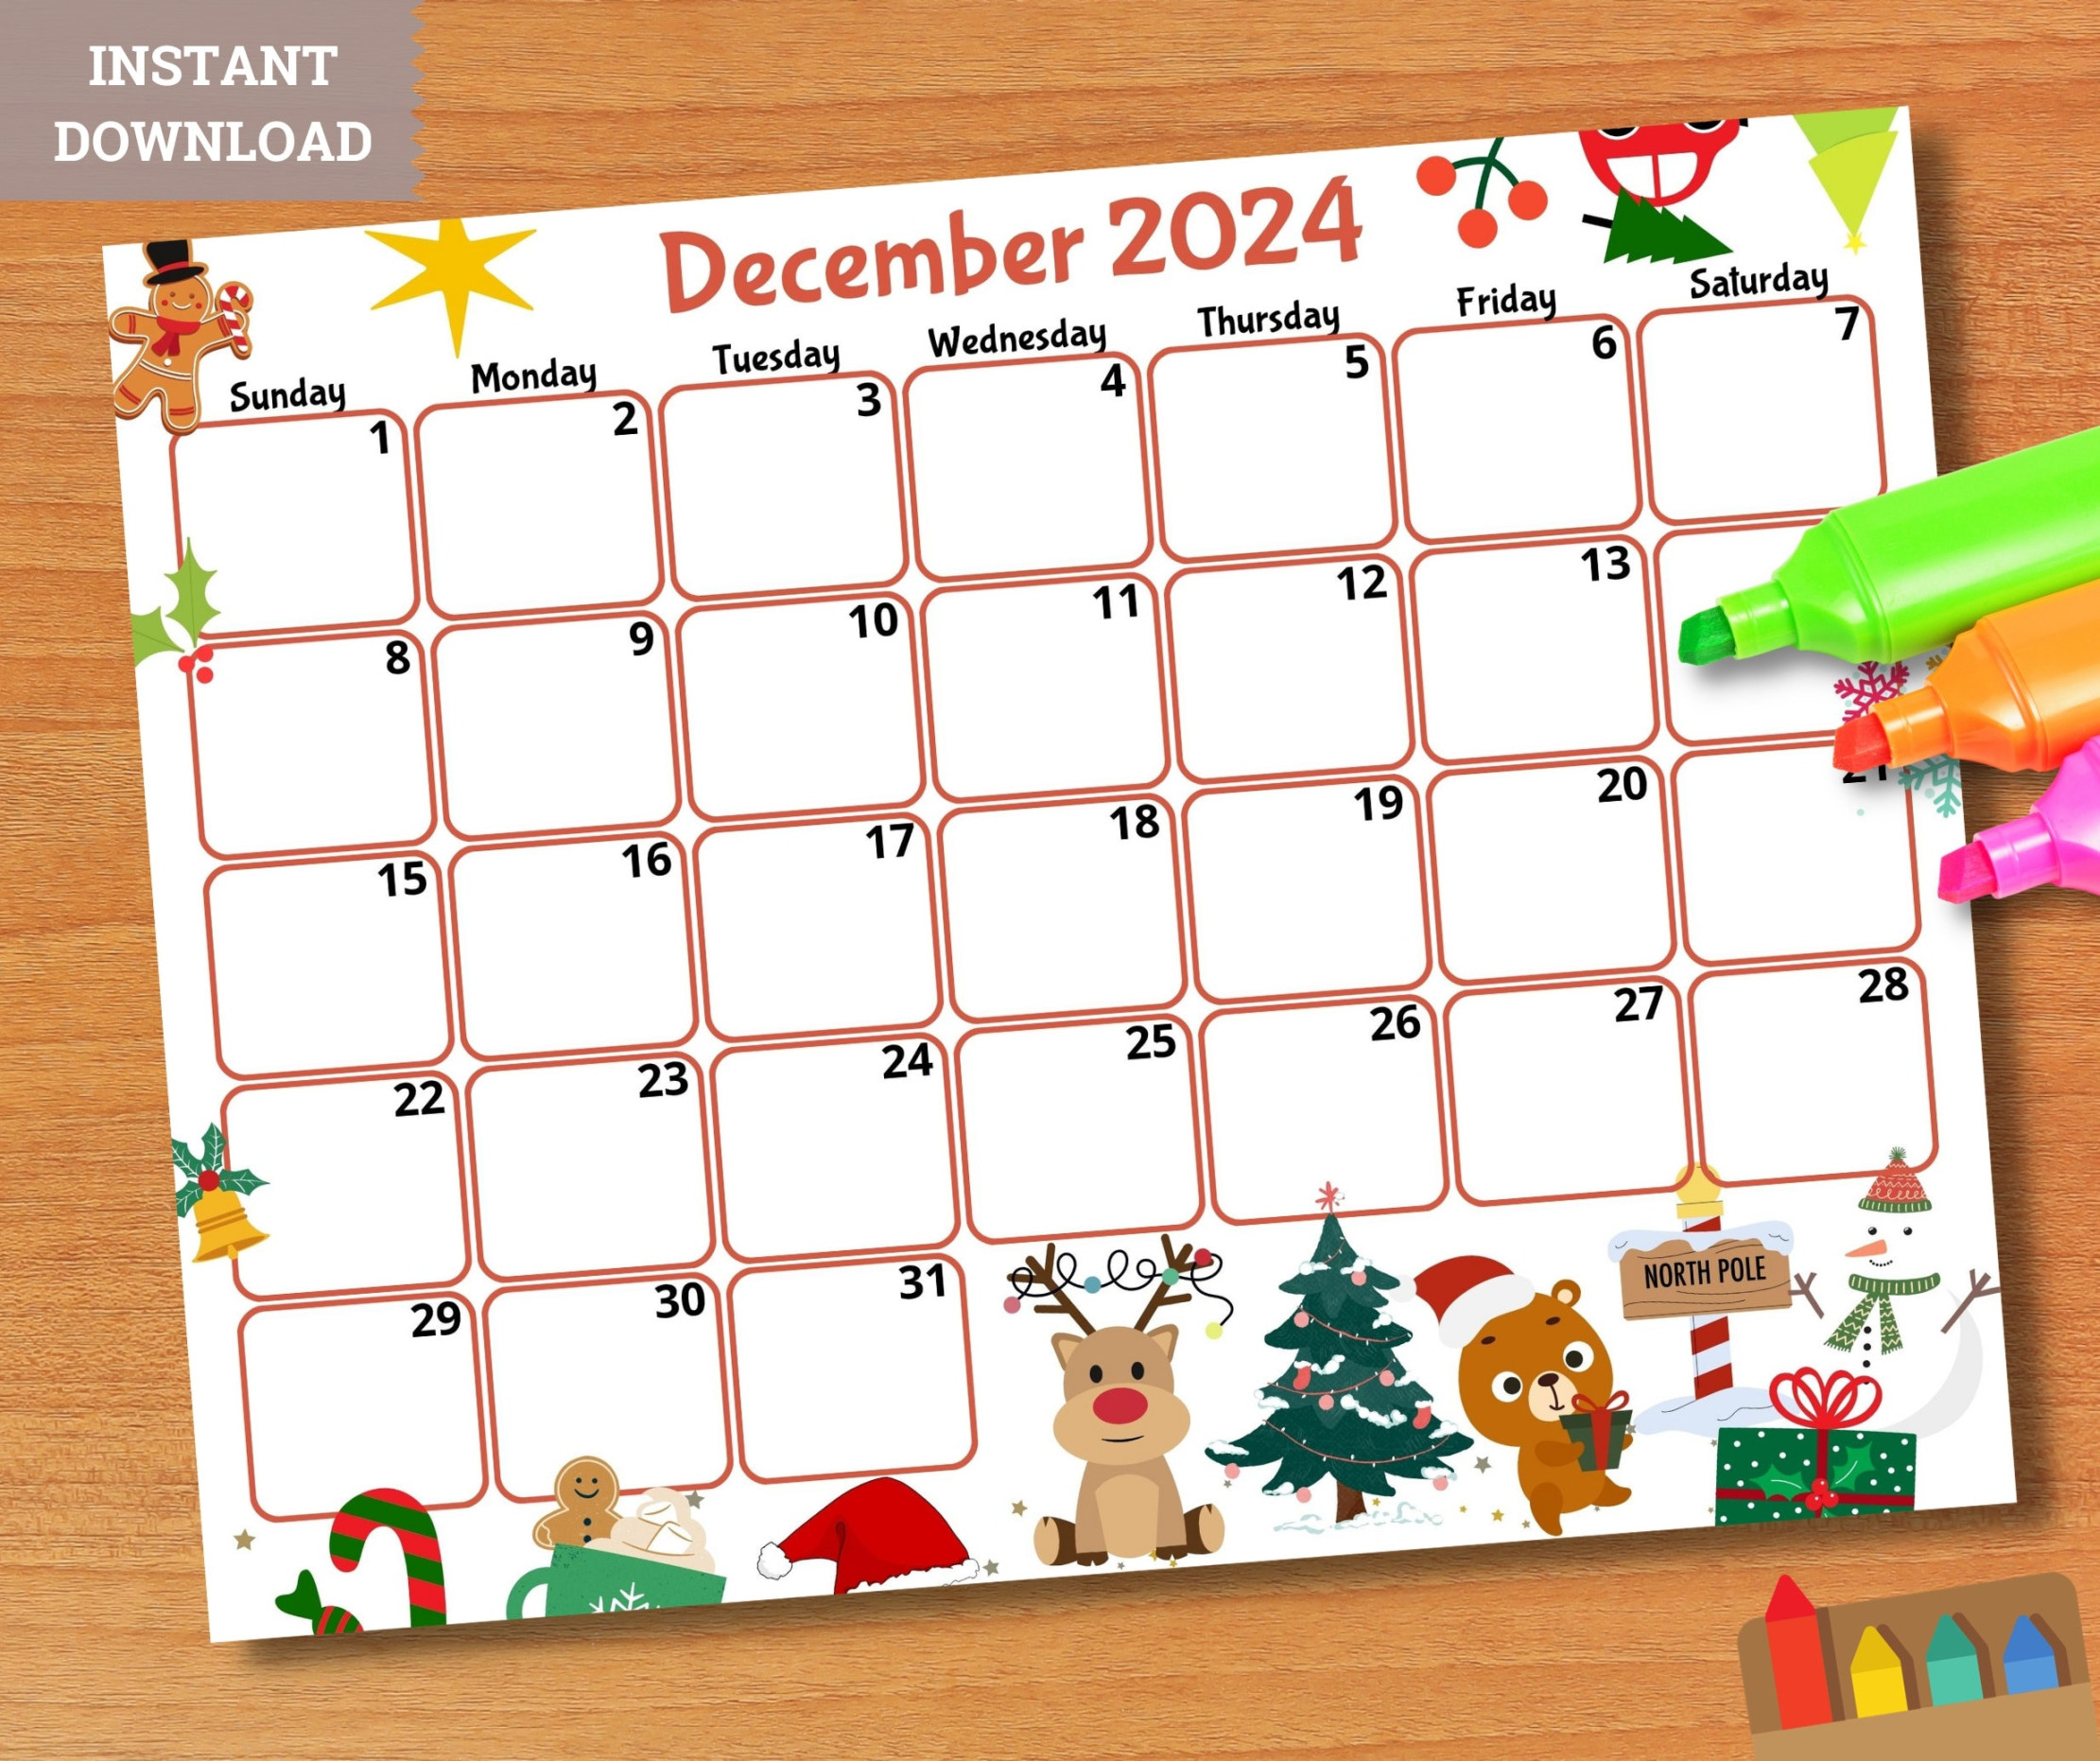 december-2024-editable-calendar-good-calendar-idea